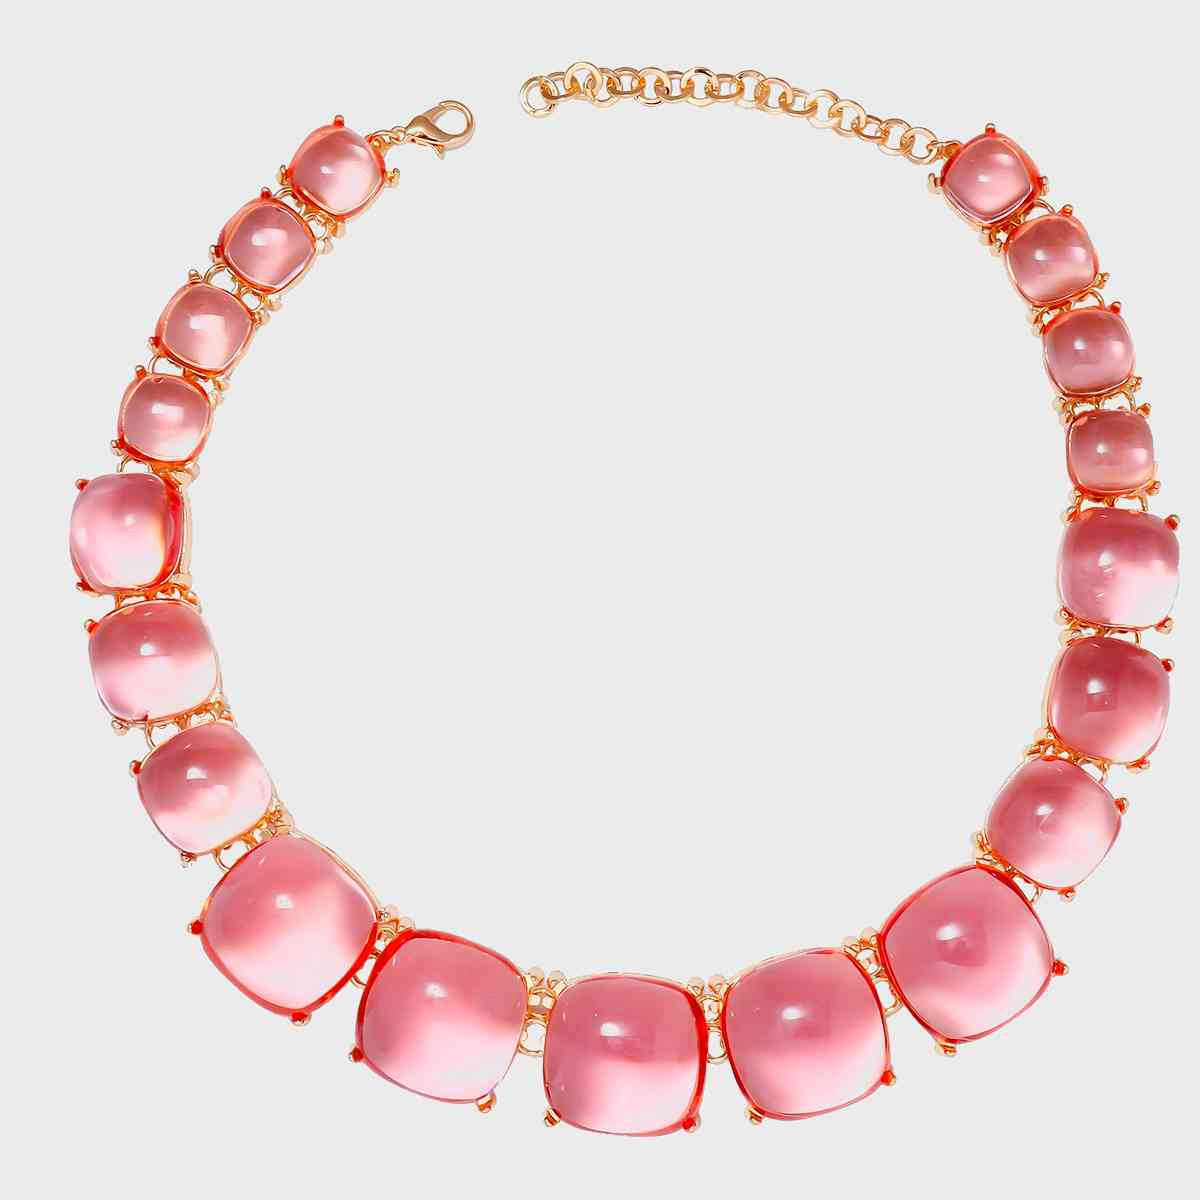 Alloy & Rhinestone Necklace Dusty Pink One Size